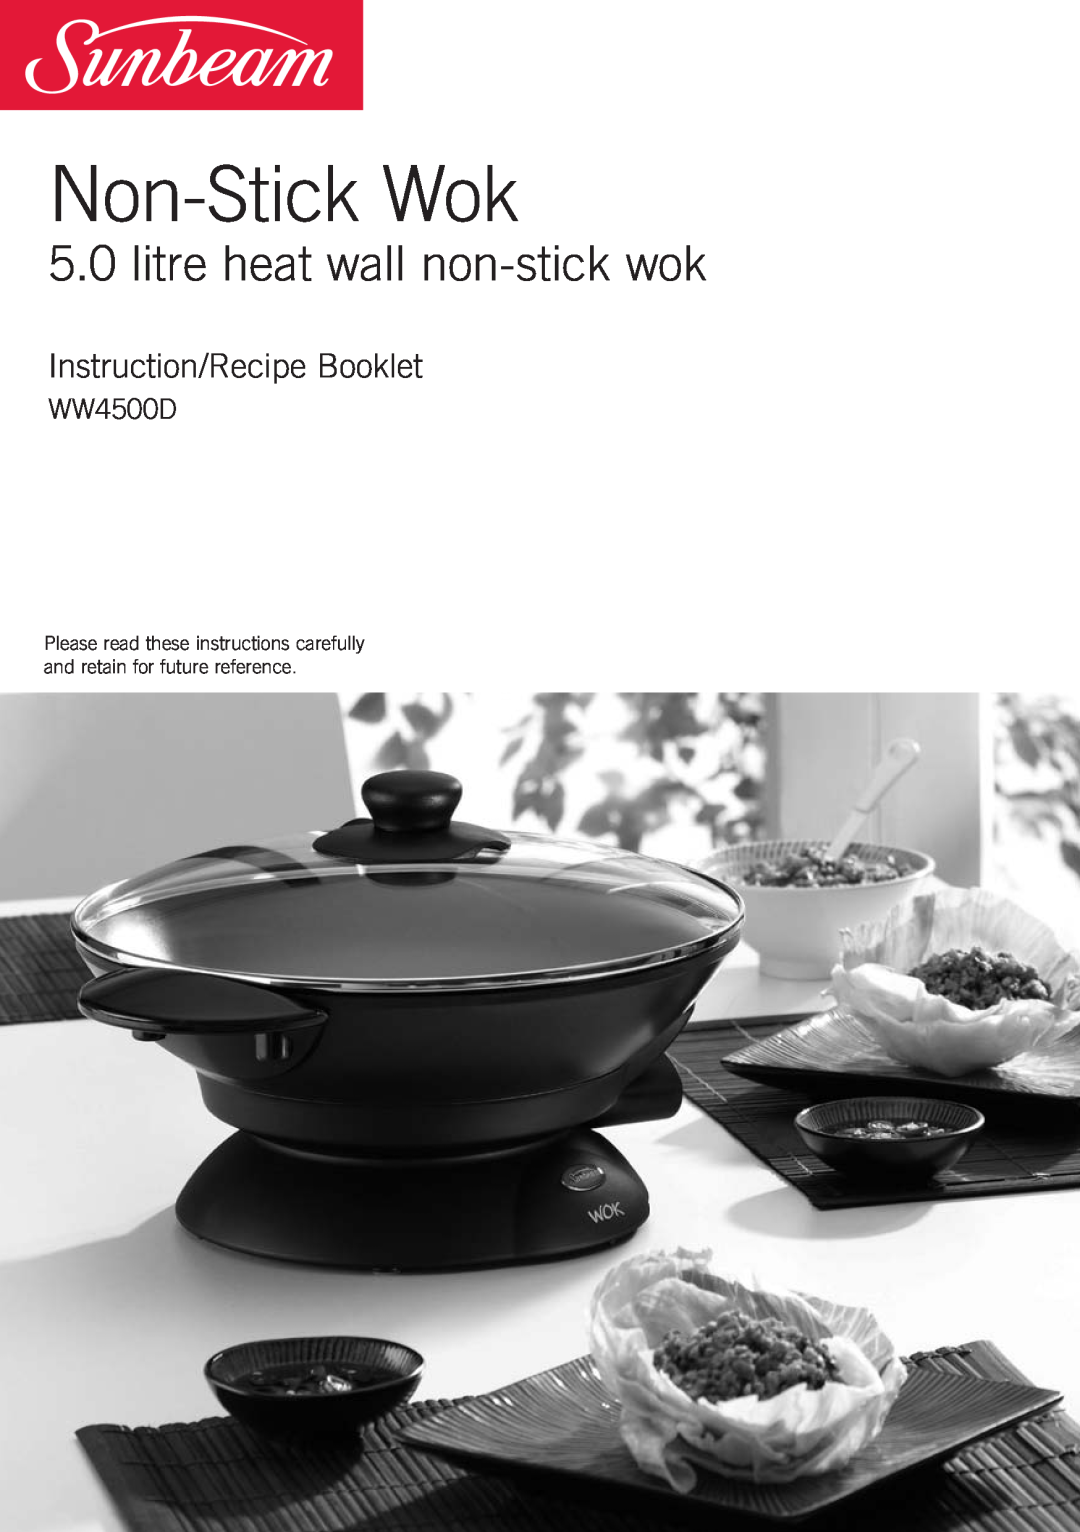 Sunbeam WW4500D manual Non-StickWok, litre heat wall non-stickwok, Instruction/Recipe Booklet 